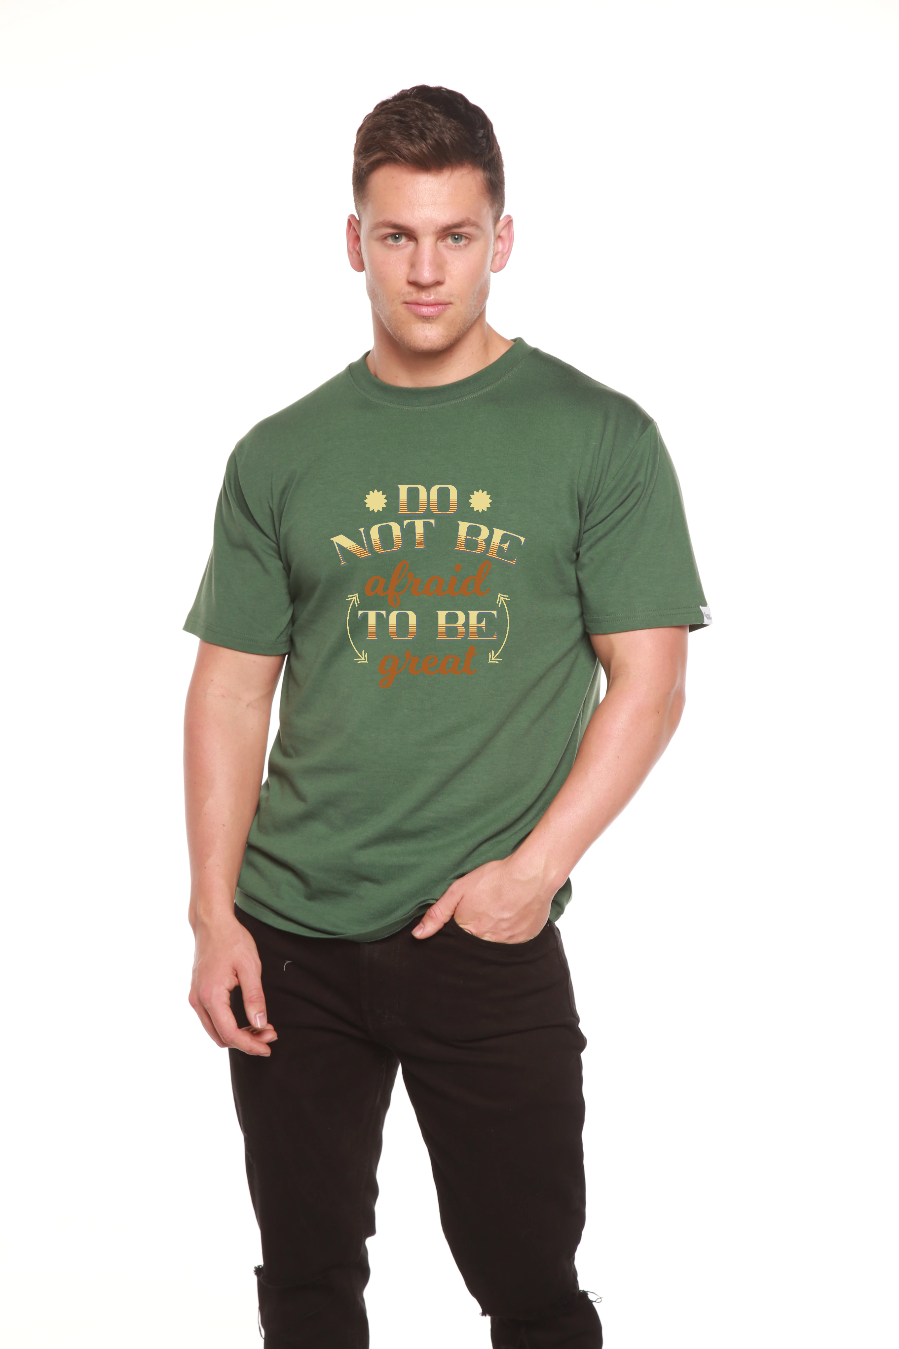 Do Not Be To Be Men's Bamboo Viscose/Organic Cotton Short Sleeve T-Shirt - Spun Bamboo